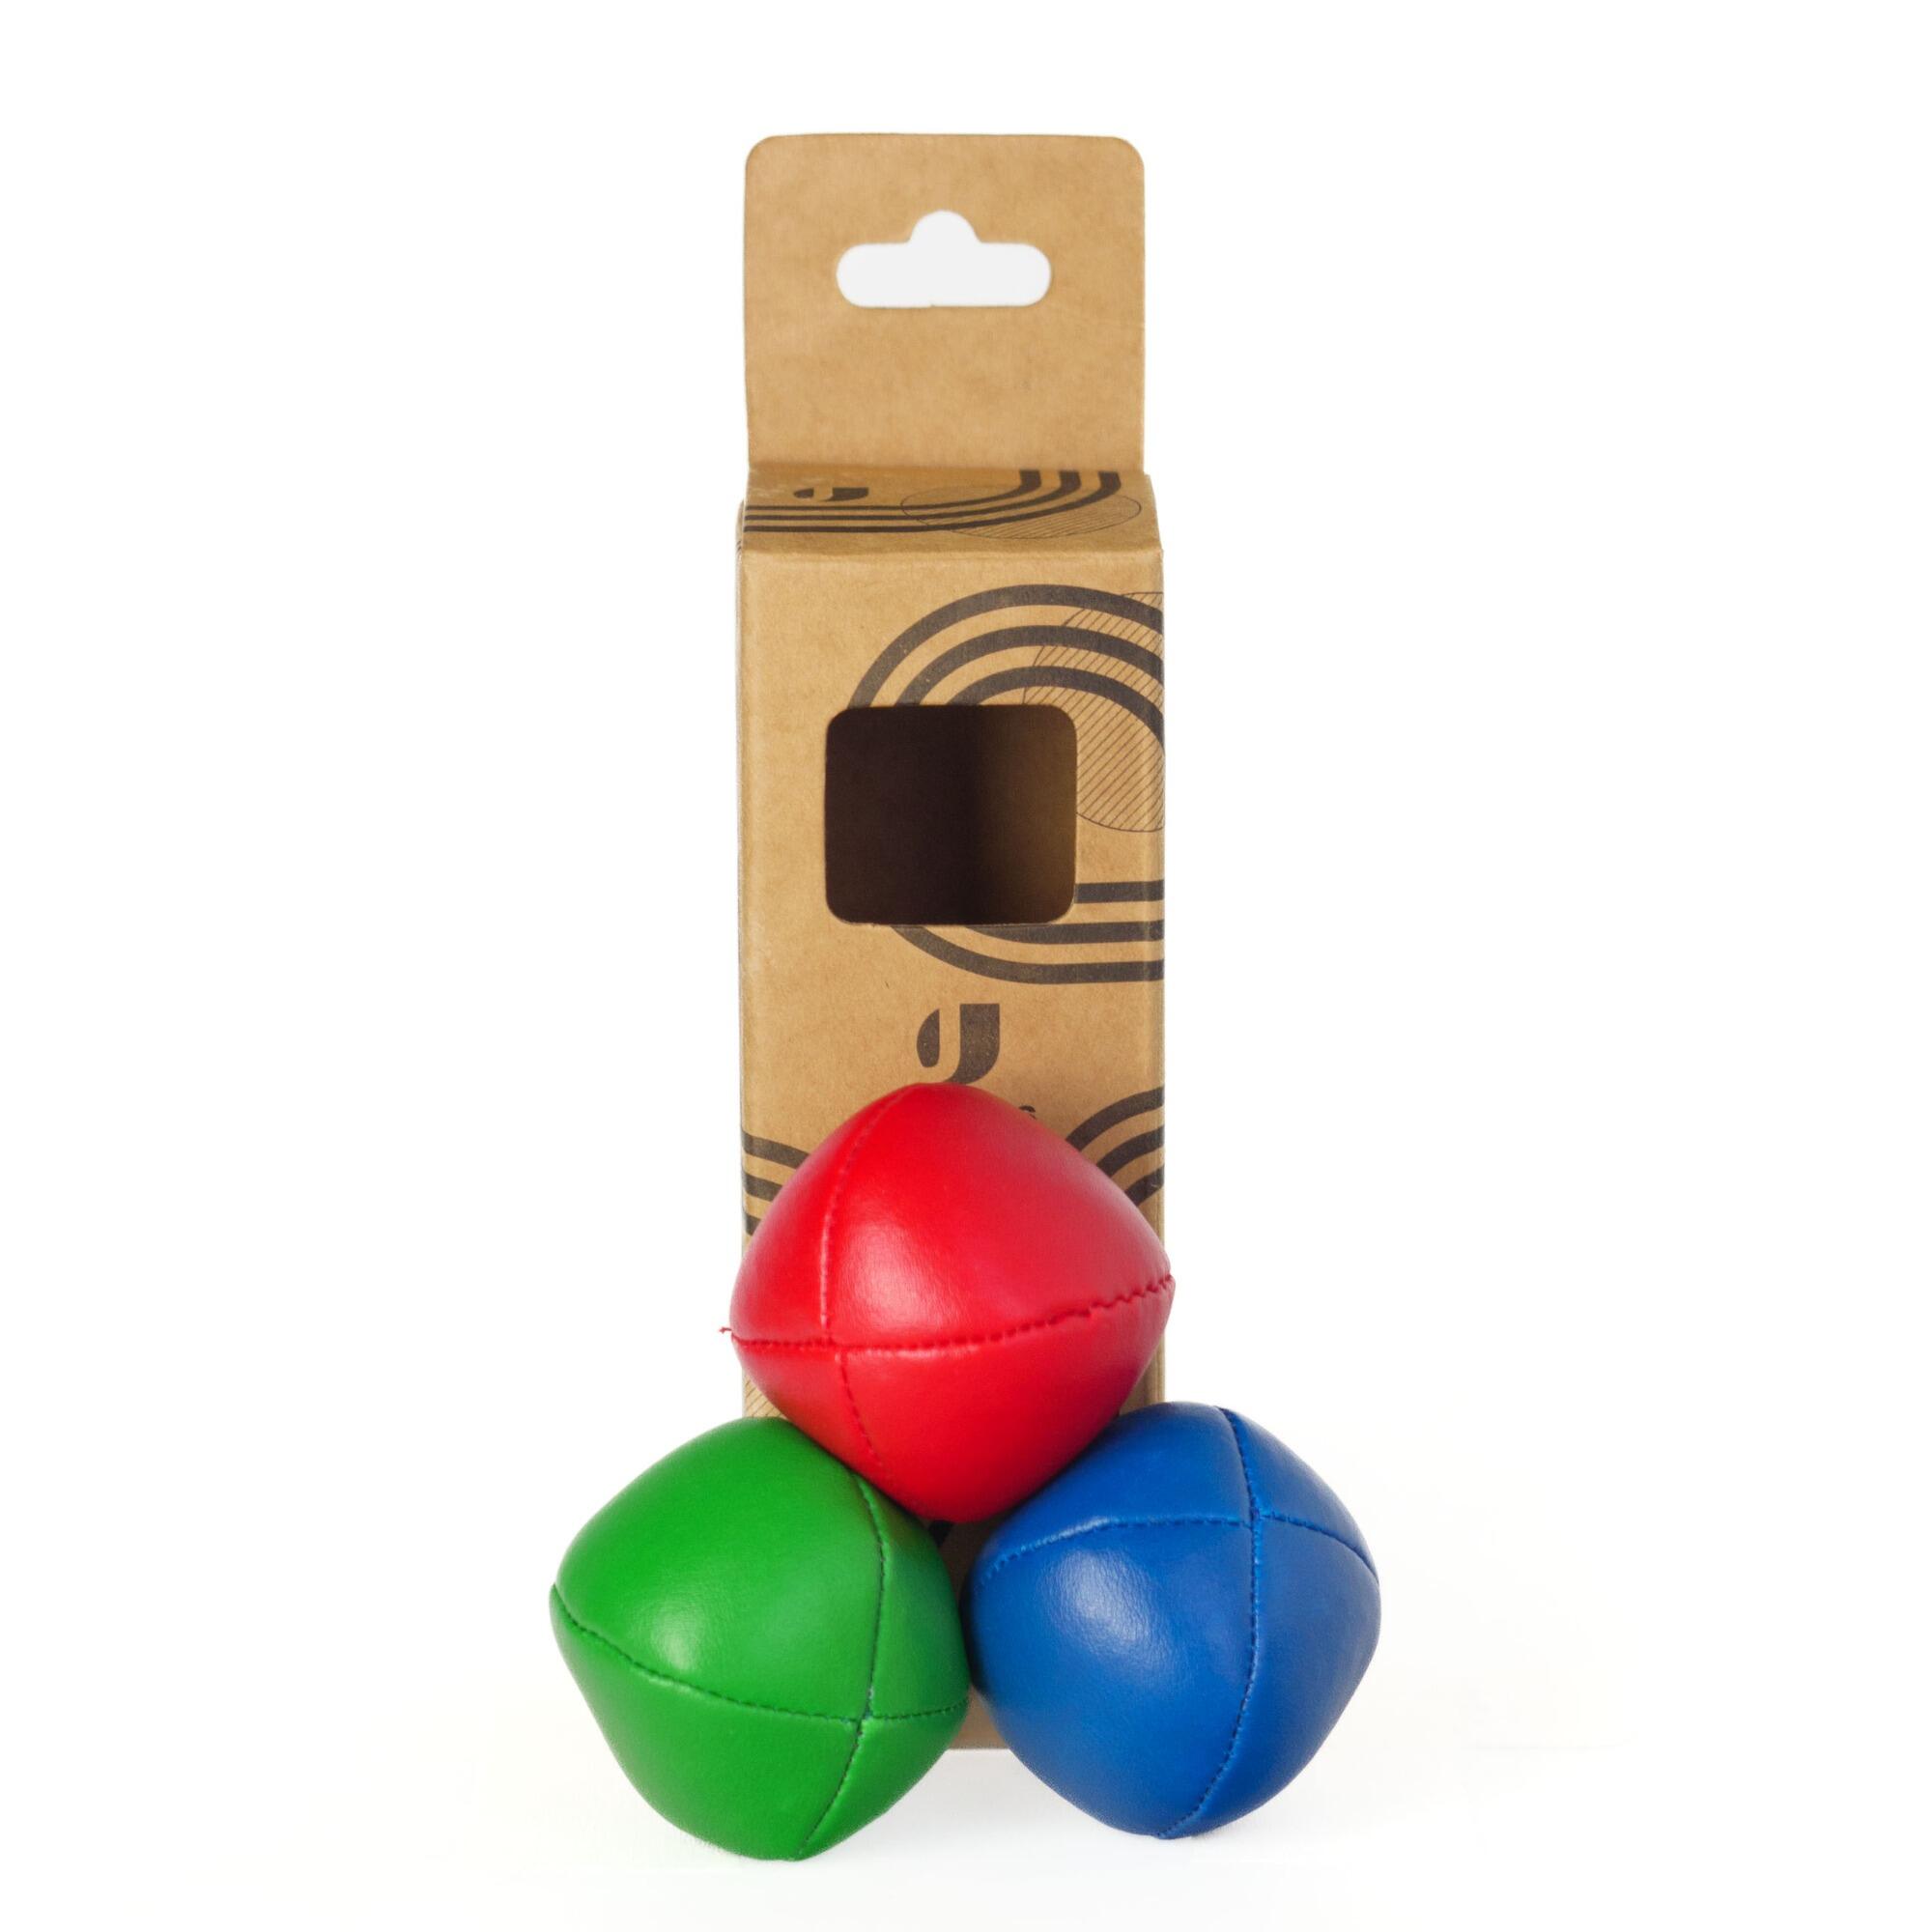 FIRETOYS Firetoys Juggling - 70g Thud - Set of 3x Juggling Balls